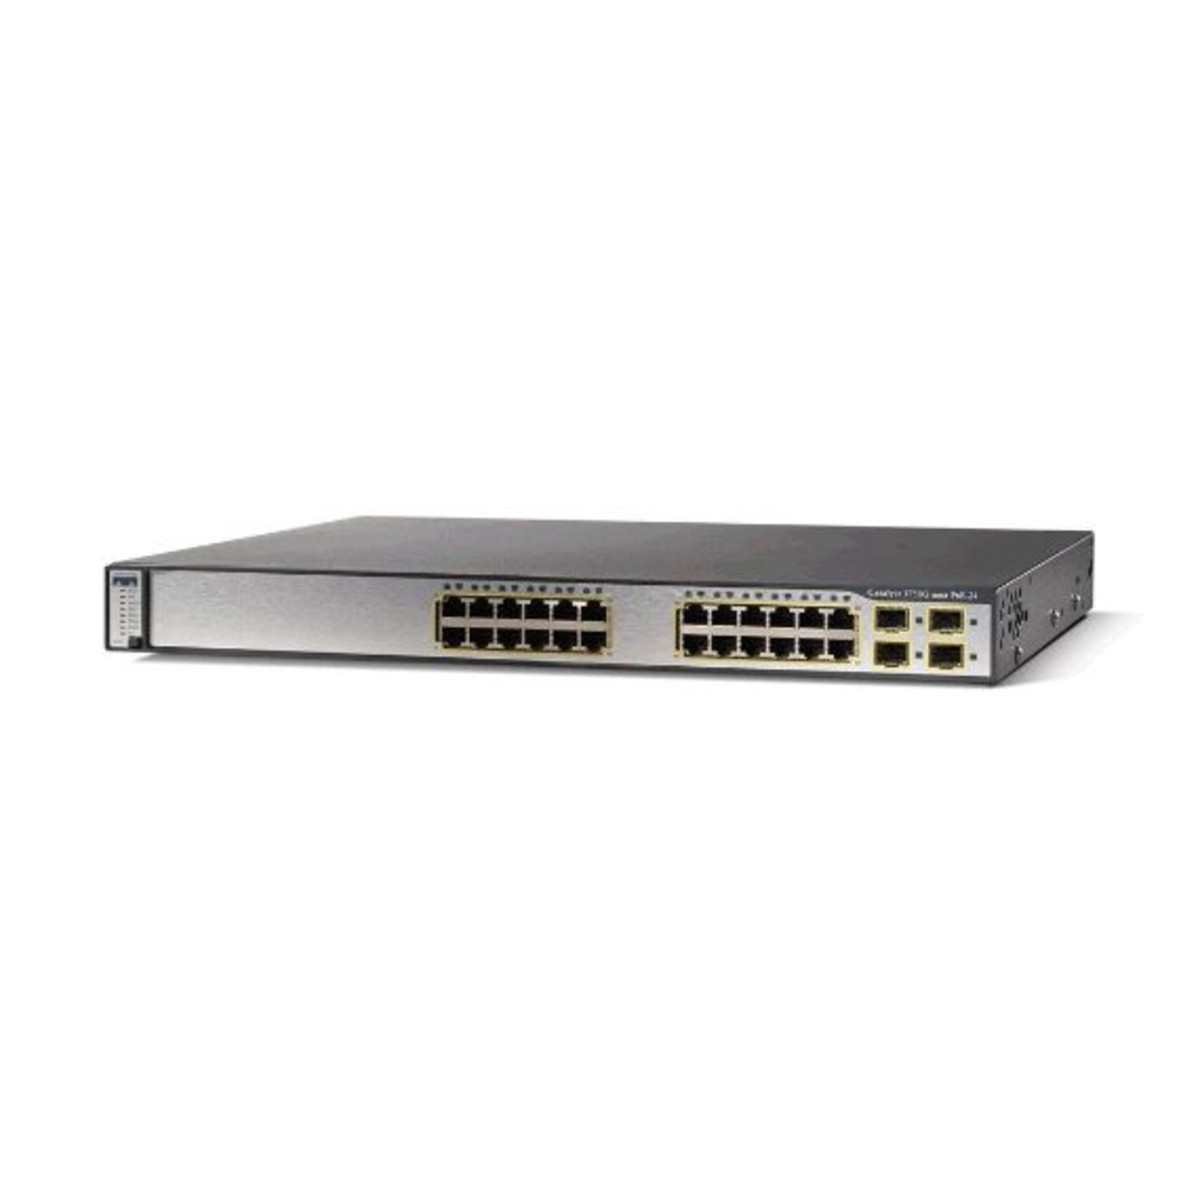 Cisco Catalyst 24 Port Switch (p/n- 3750-24PS-E)